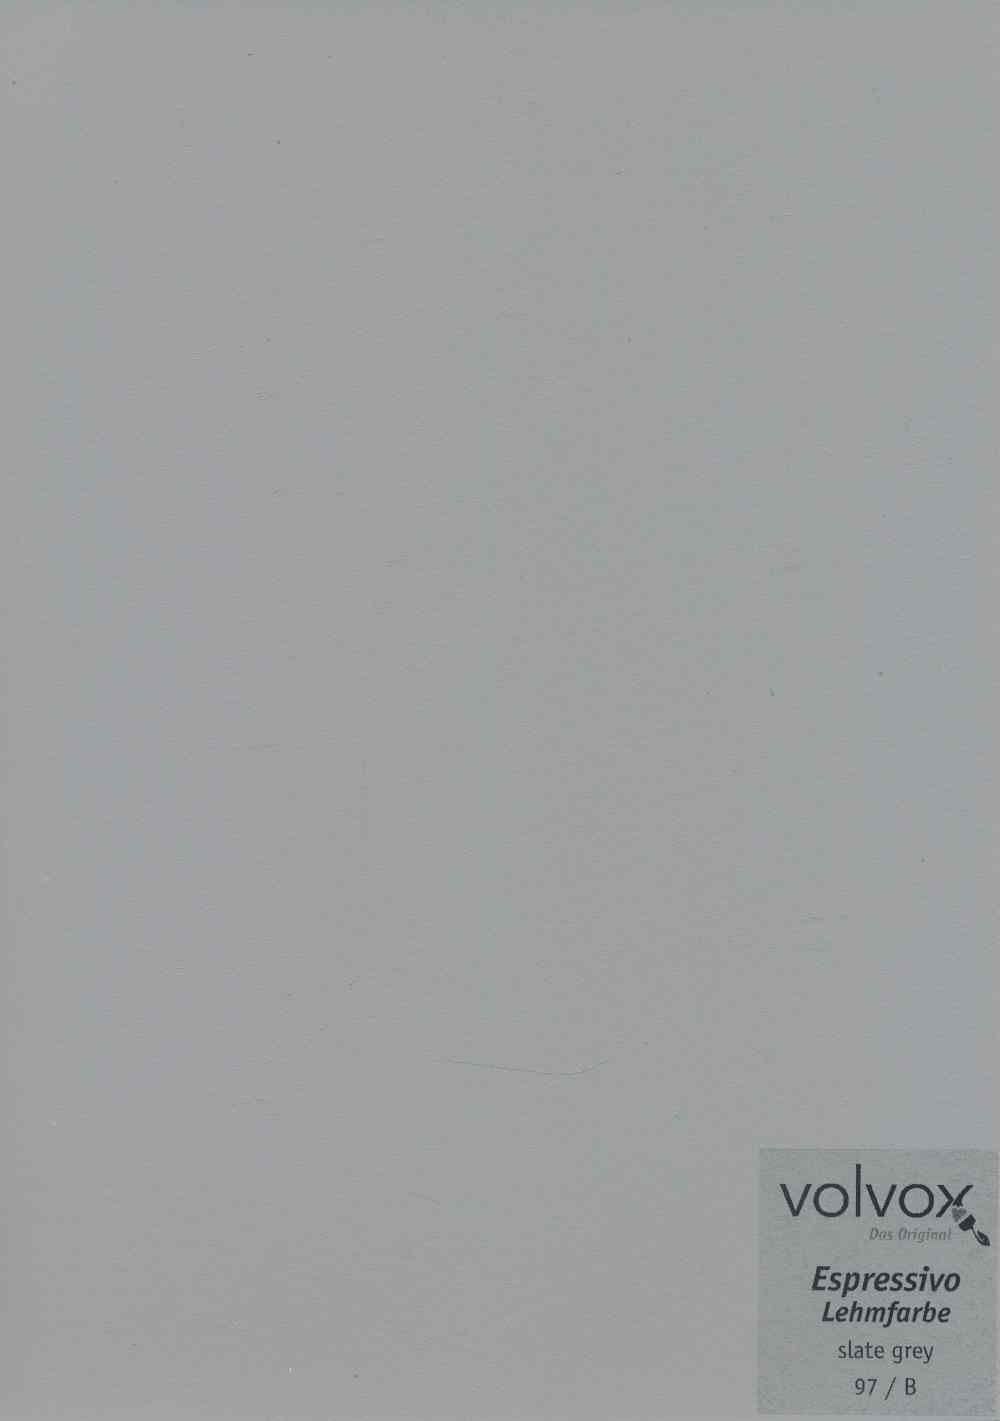 Volvox Espressivo Lehmfarbe 097 slate grey 